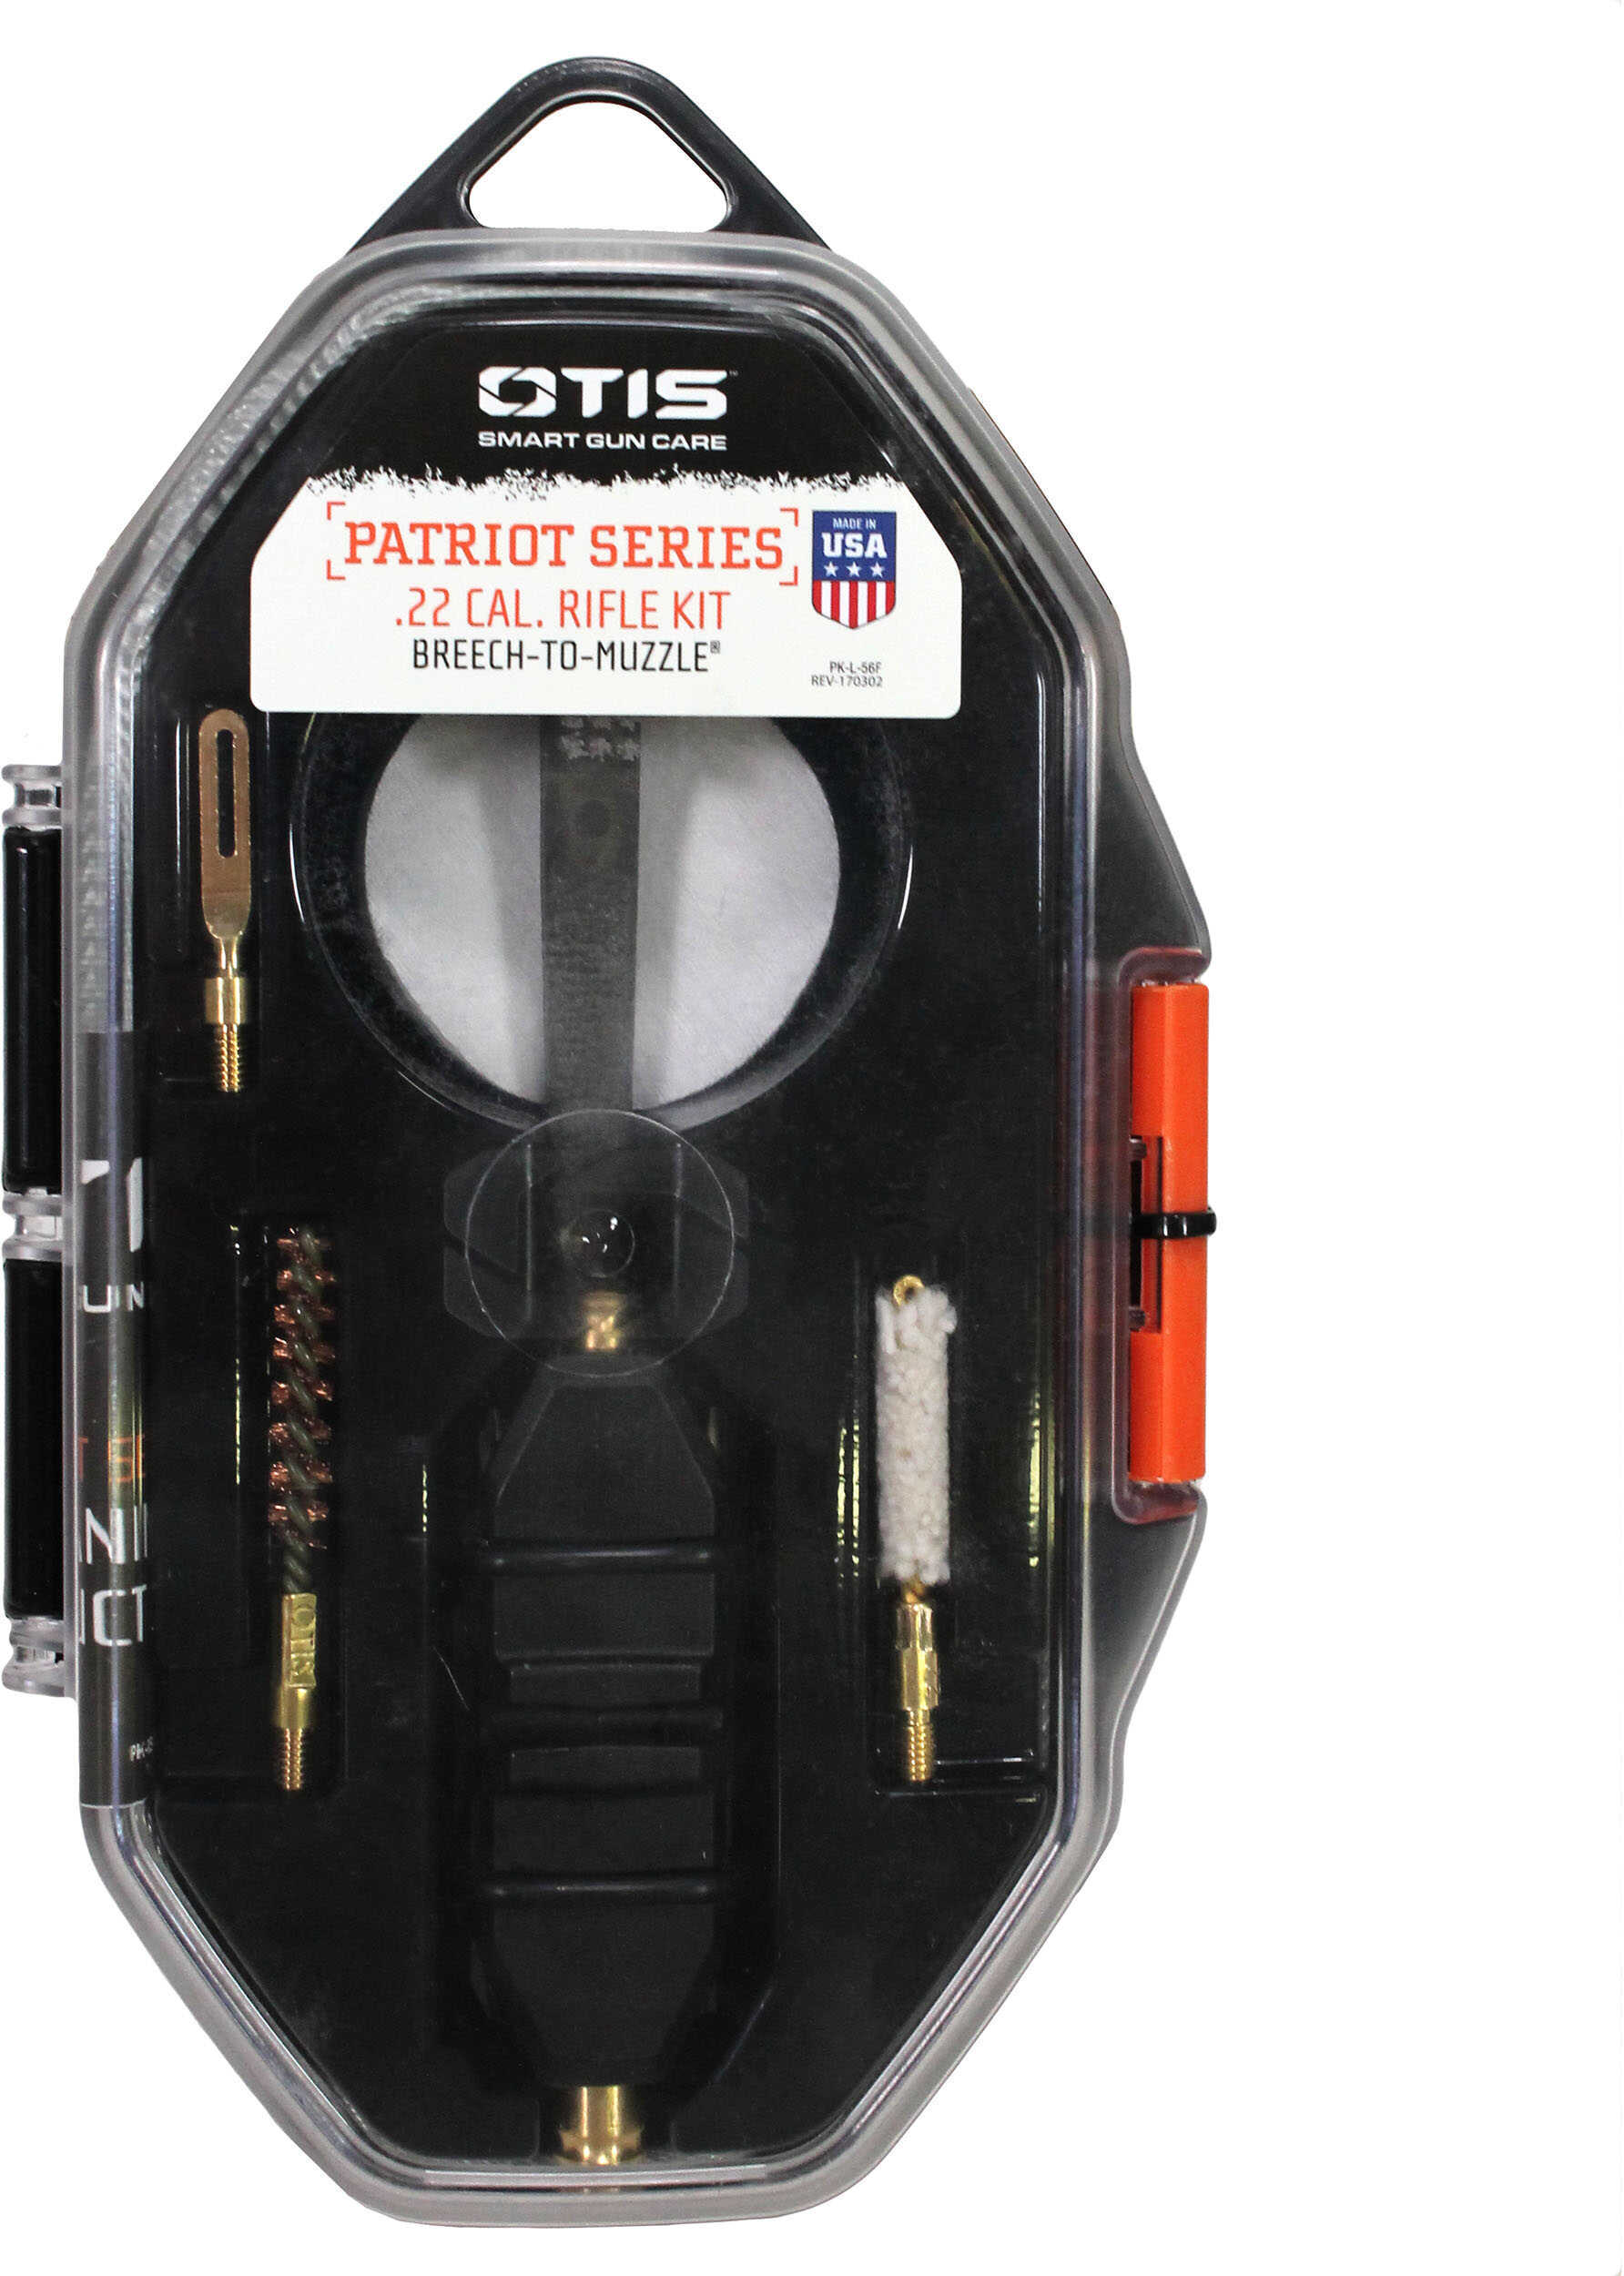 Patriot Series Rifle Kit